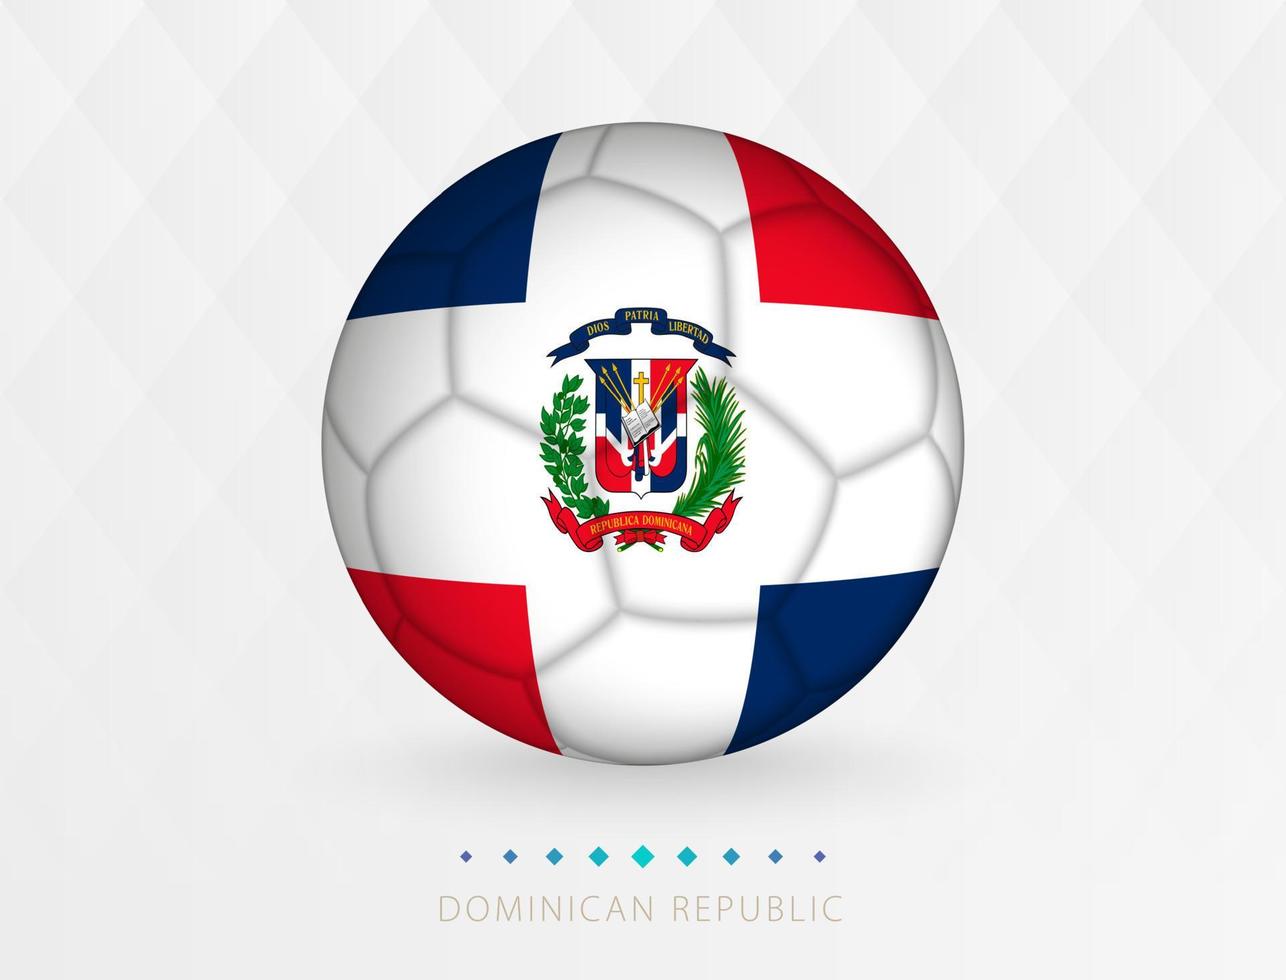 Amerikaans voetbal bal met dominicaans republiek vlag patroon, voetbal bal met vlag van dominicaans republiek nationaal team. vector